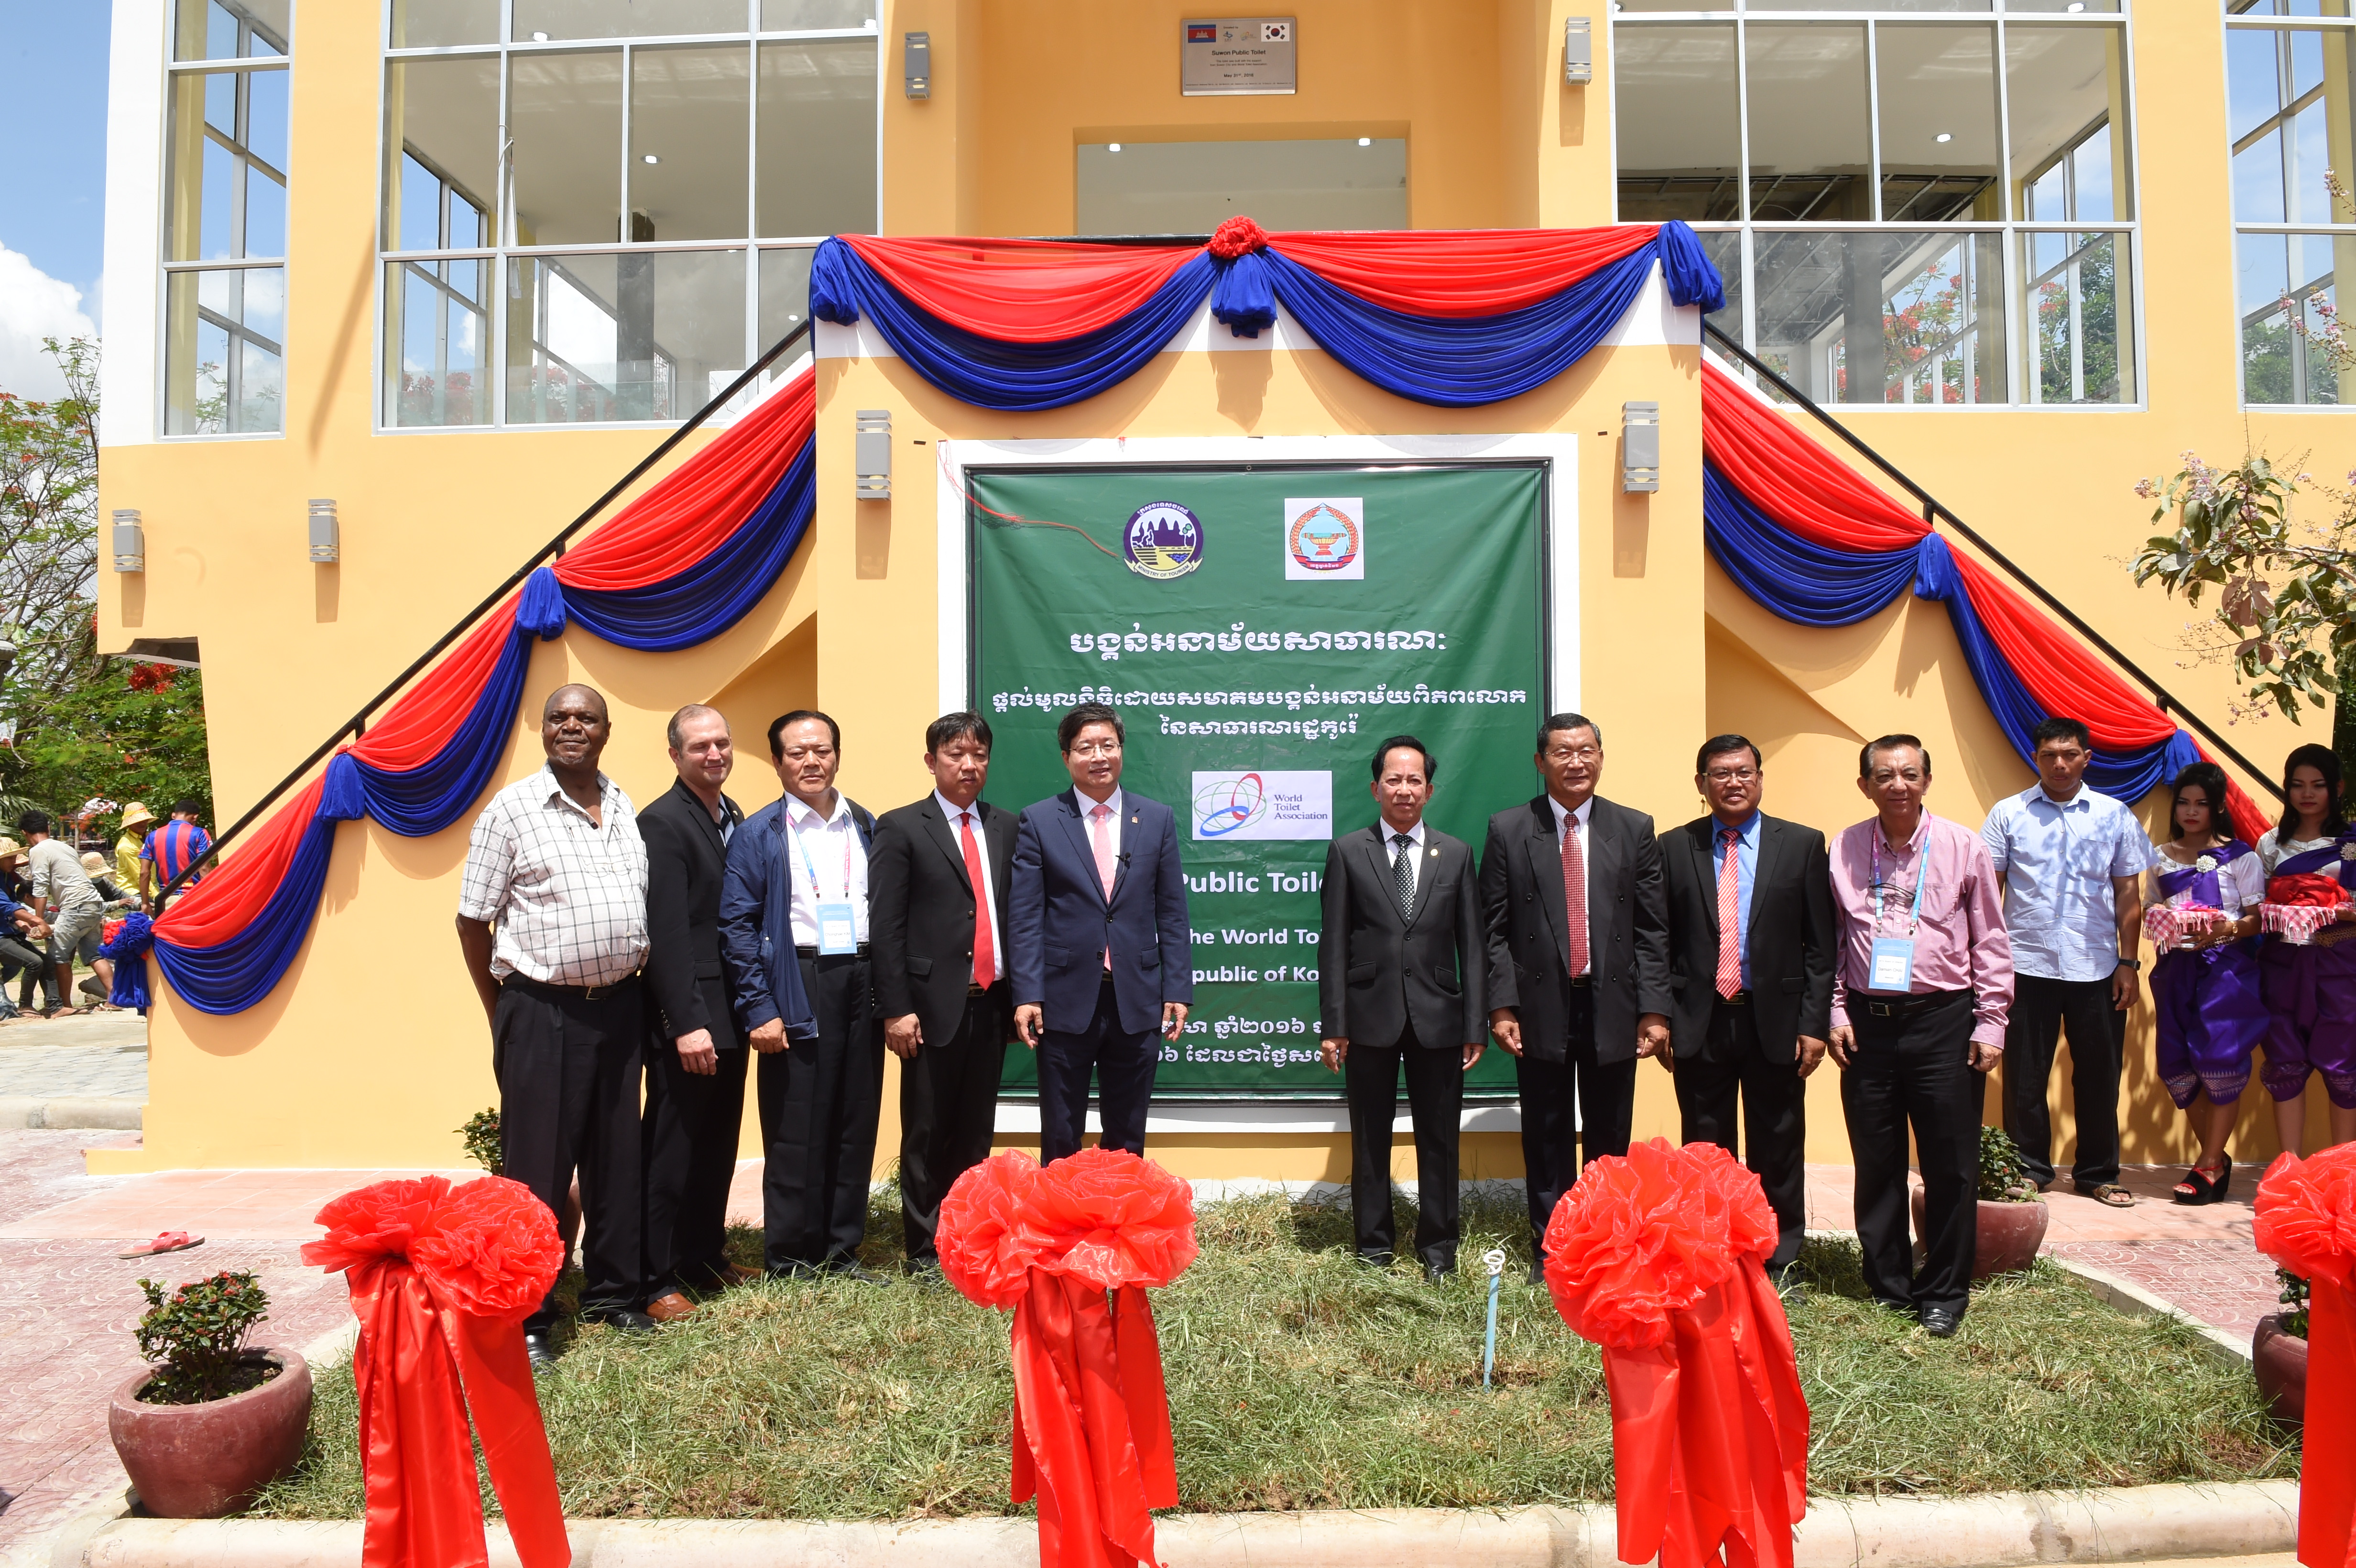 5. Inauguration Ceremony for WTA Public Toilet in Battambang (15).JPG